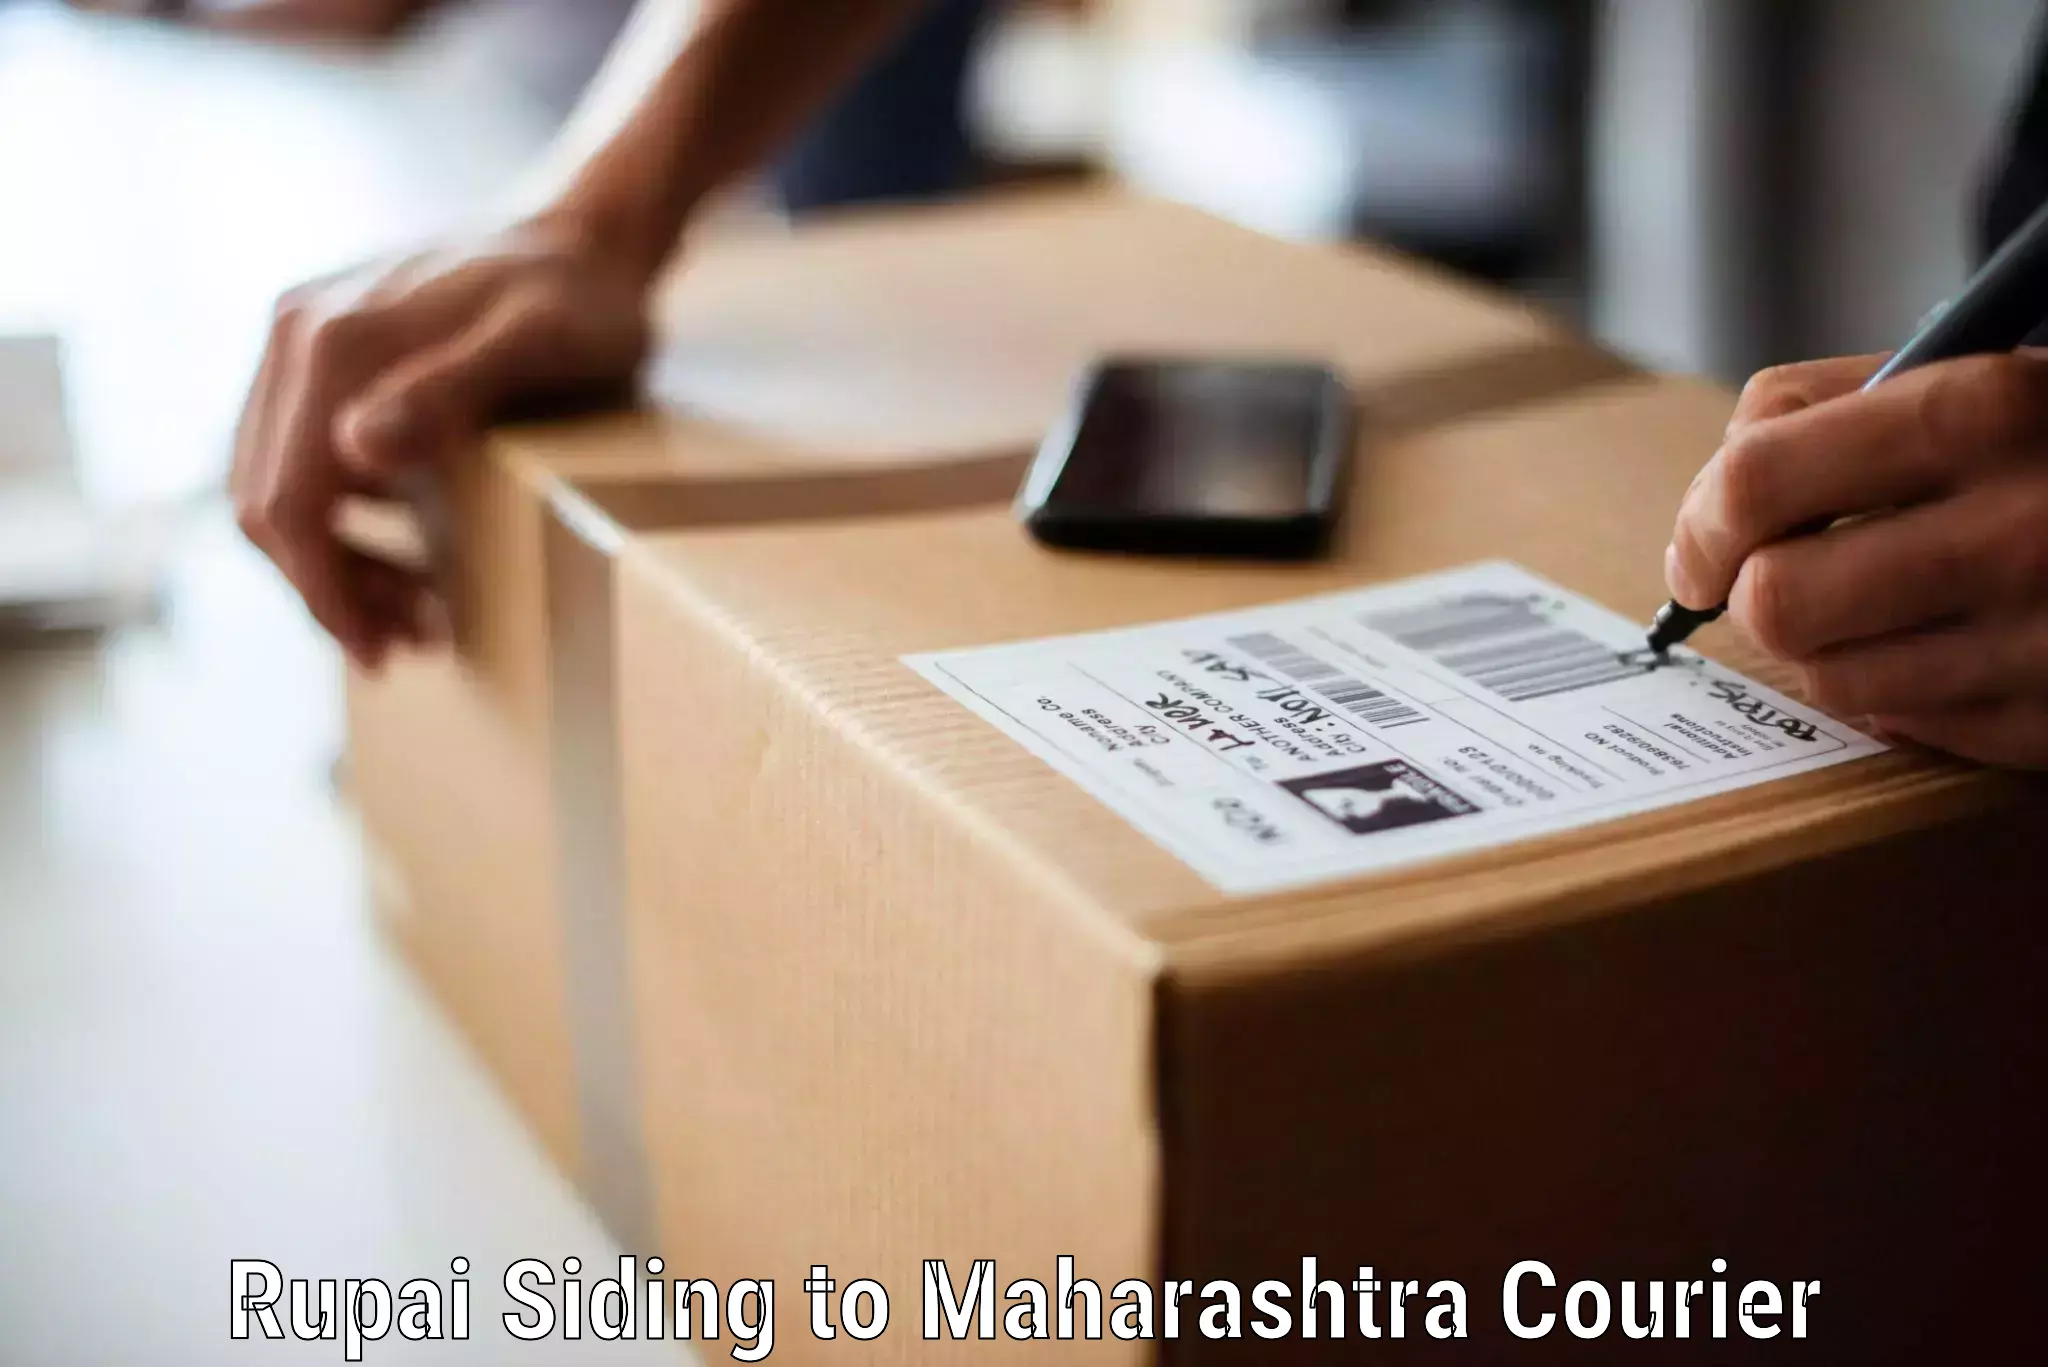 Furniture moving assistance Rupai Siding to Khandala Pune